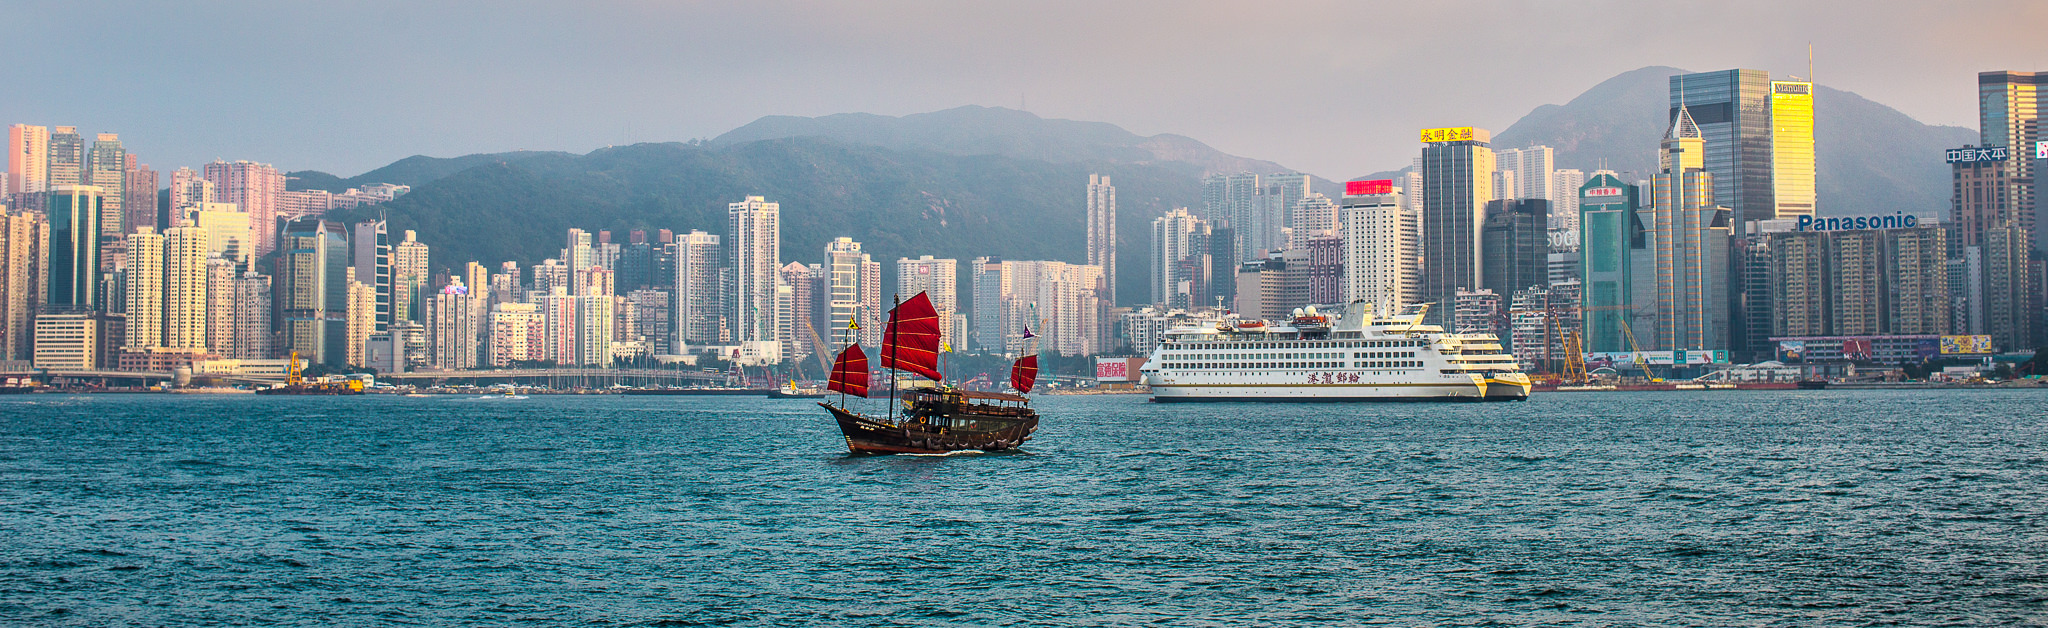 hong kong skyline - travel and lifestyle photography